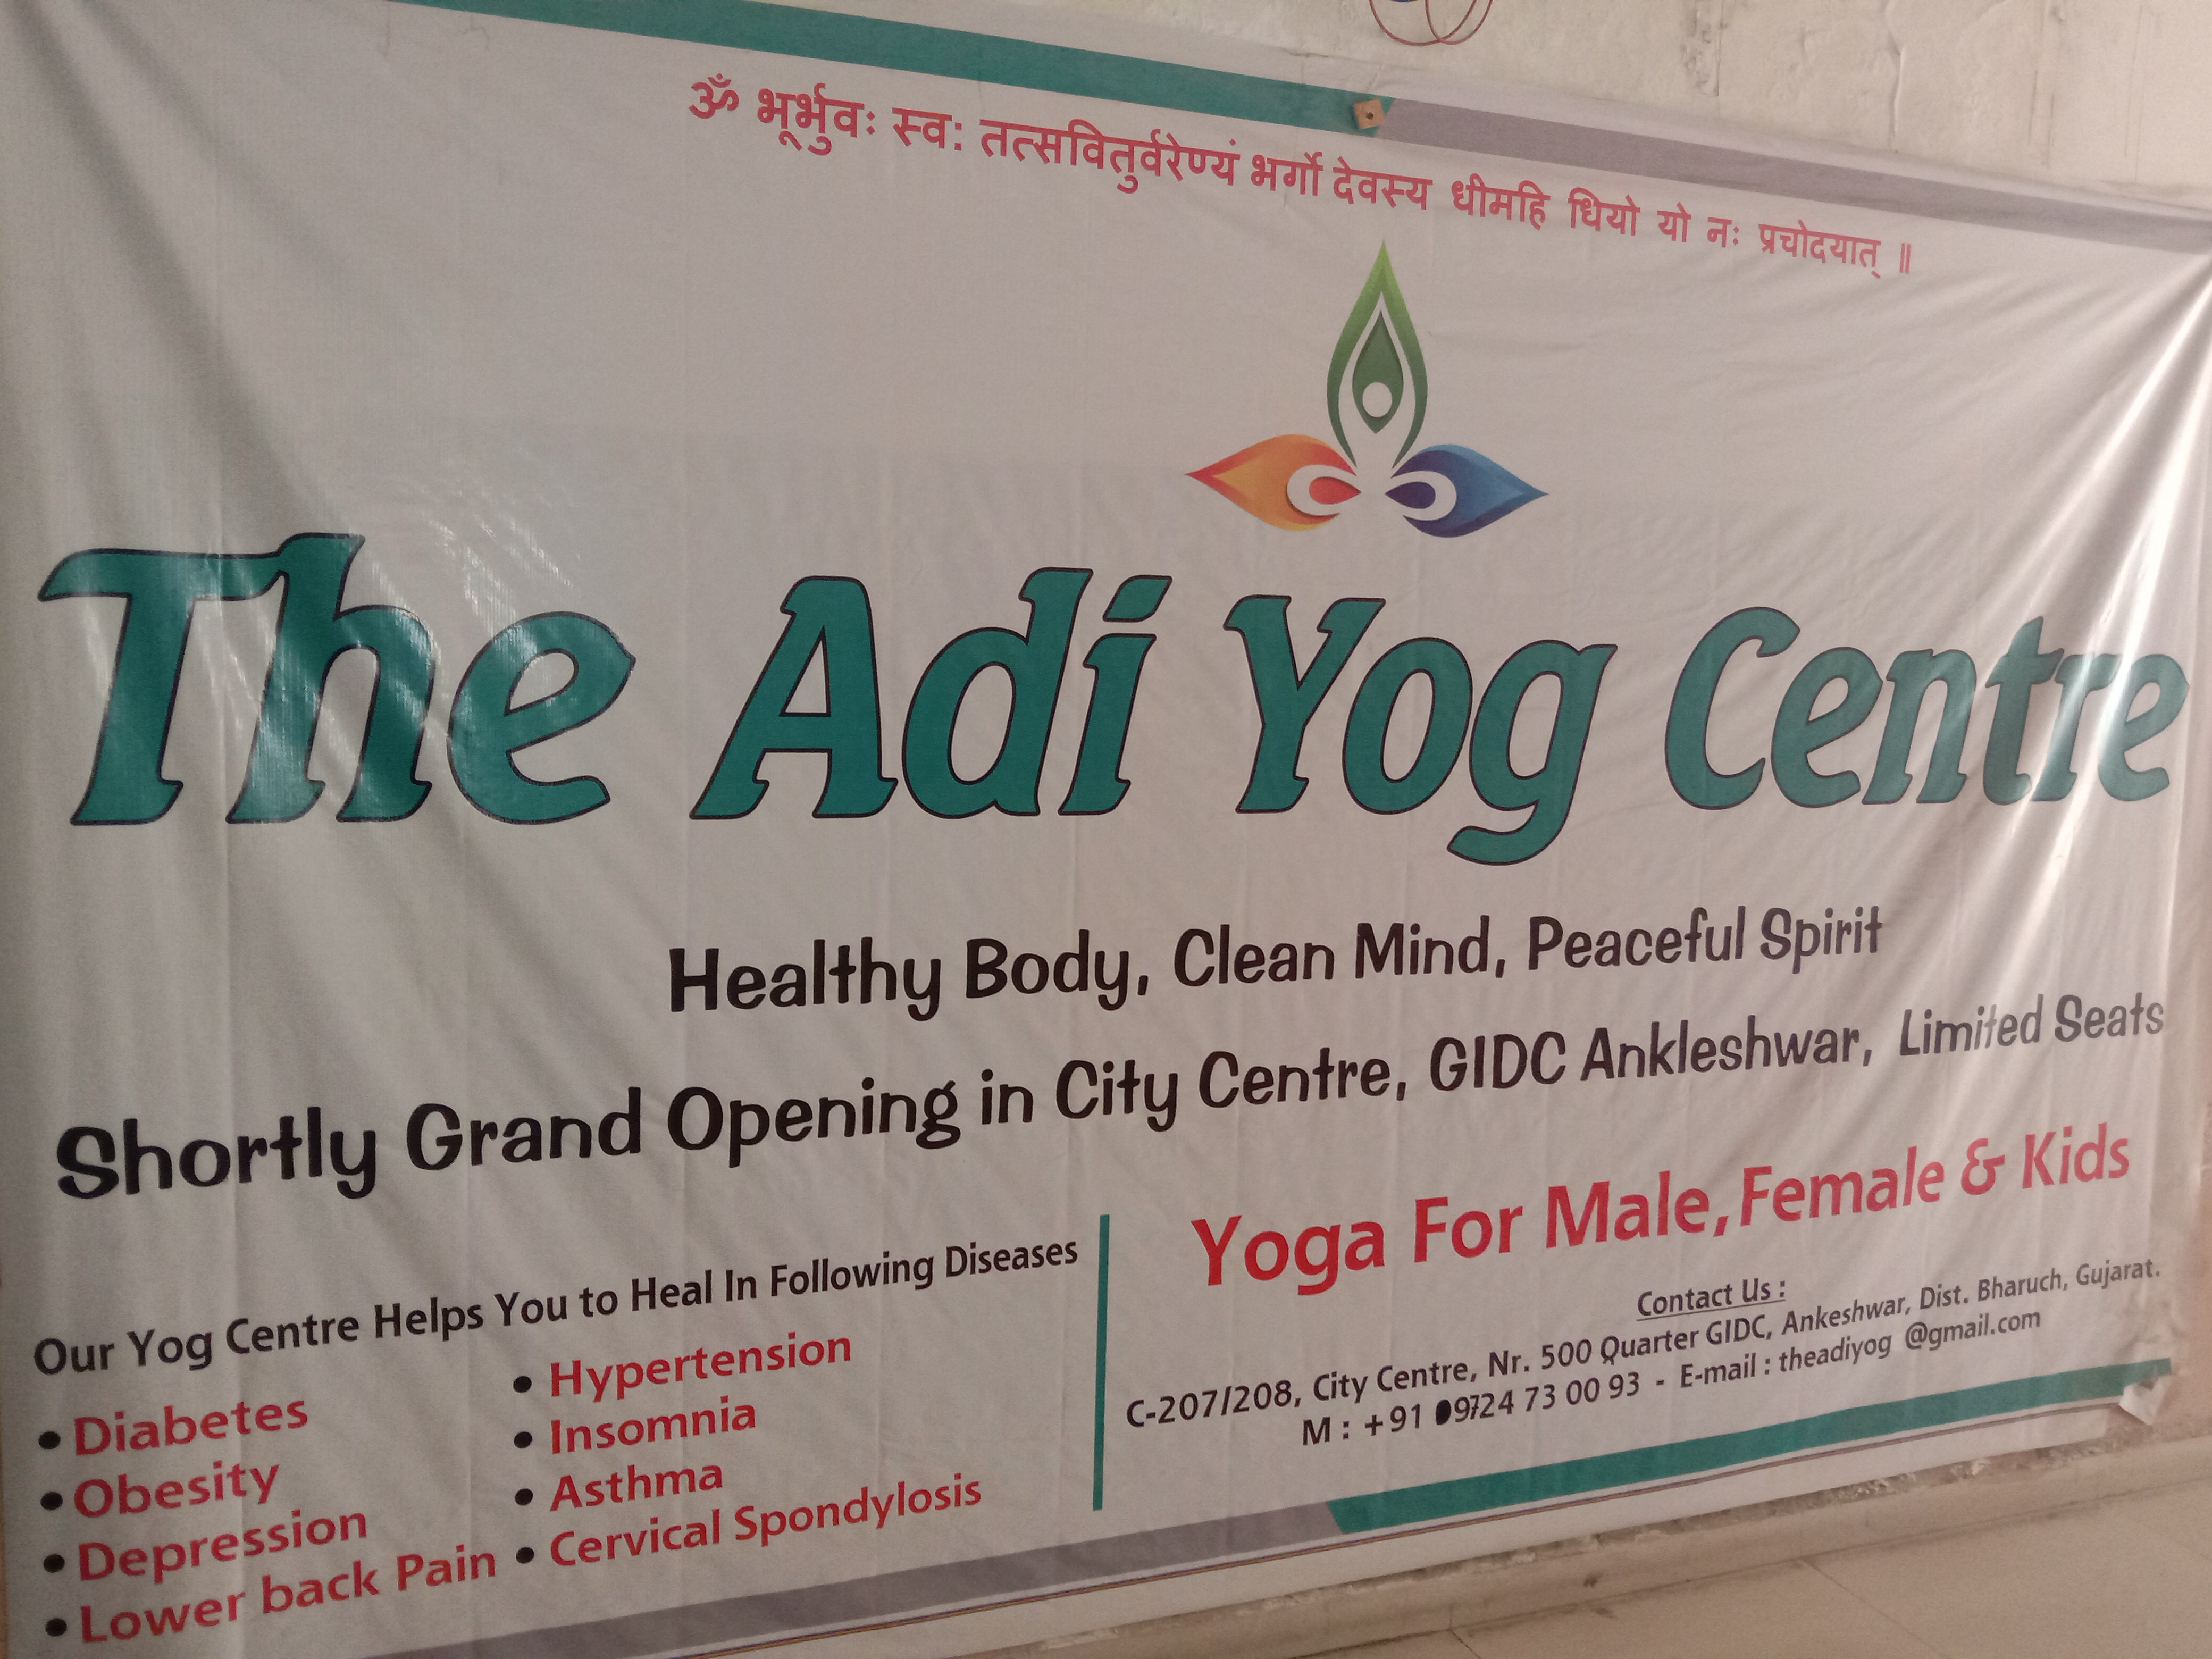 Ankleshwar-GIDC-city-centre-complex-The-adi-yog-centre_179_MTc5